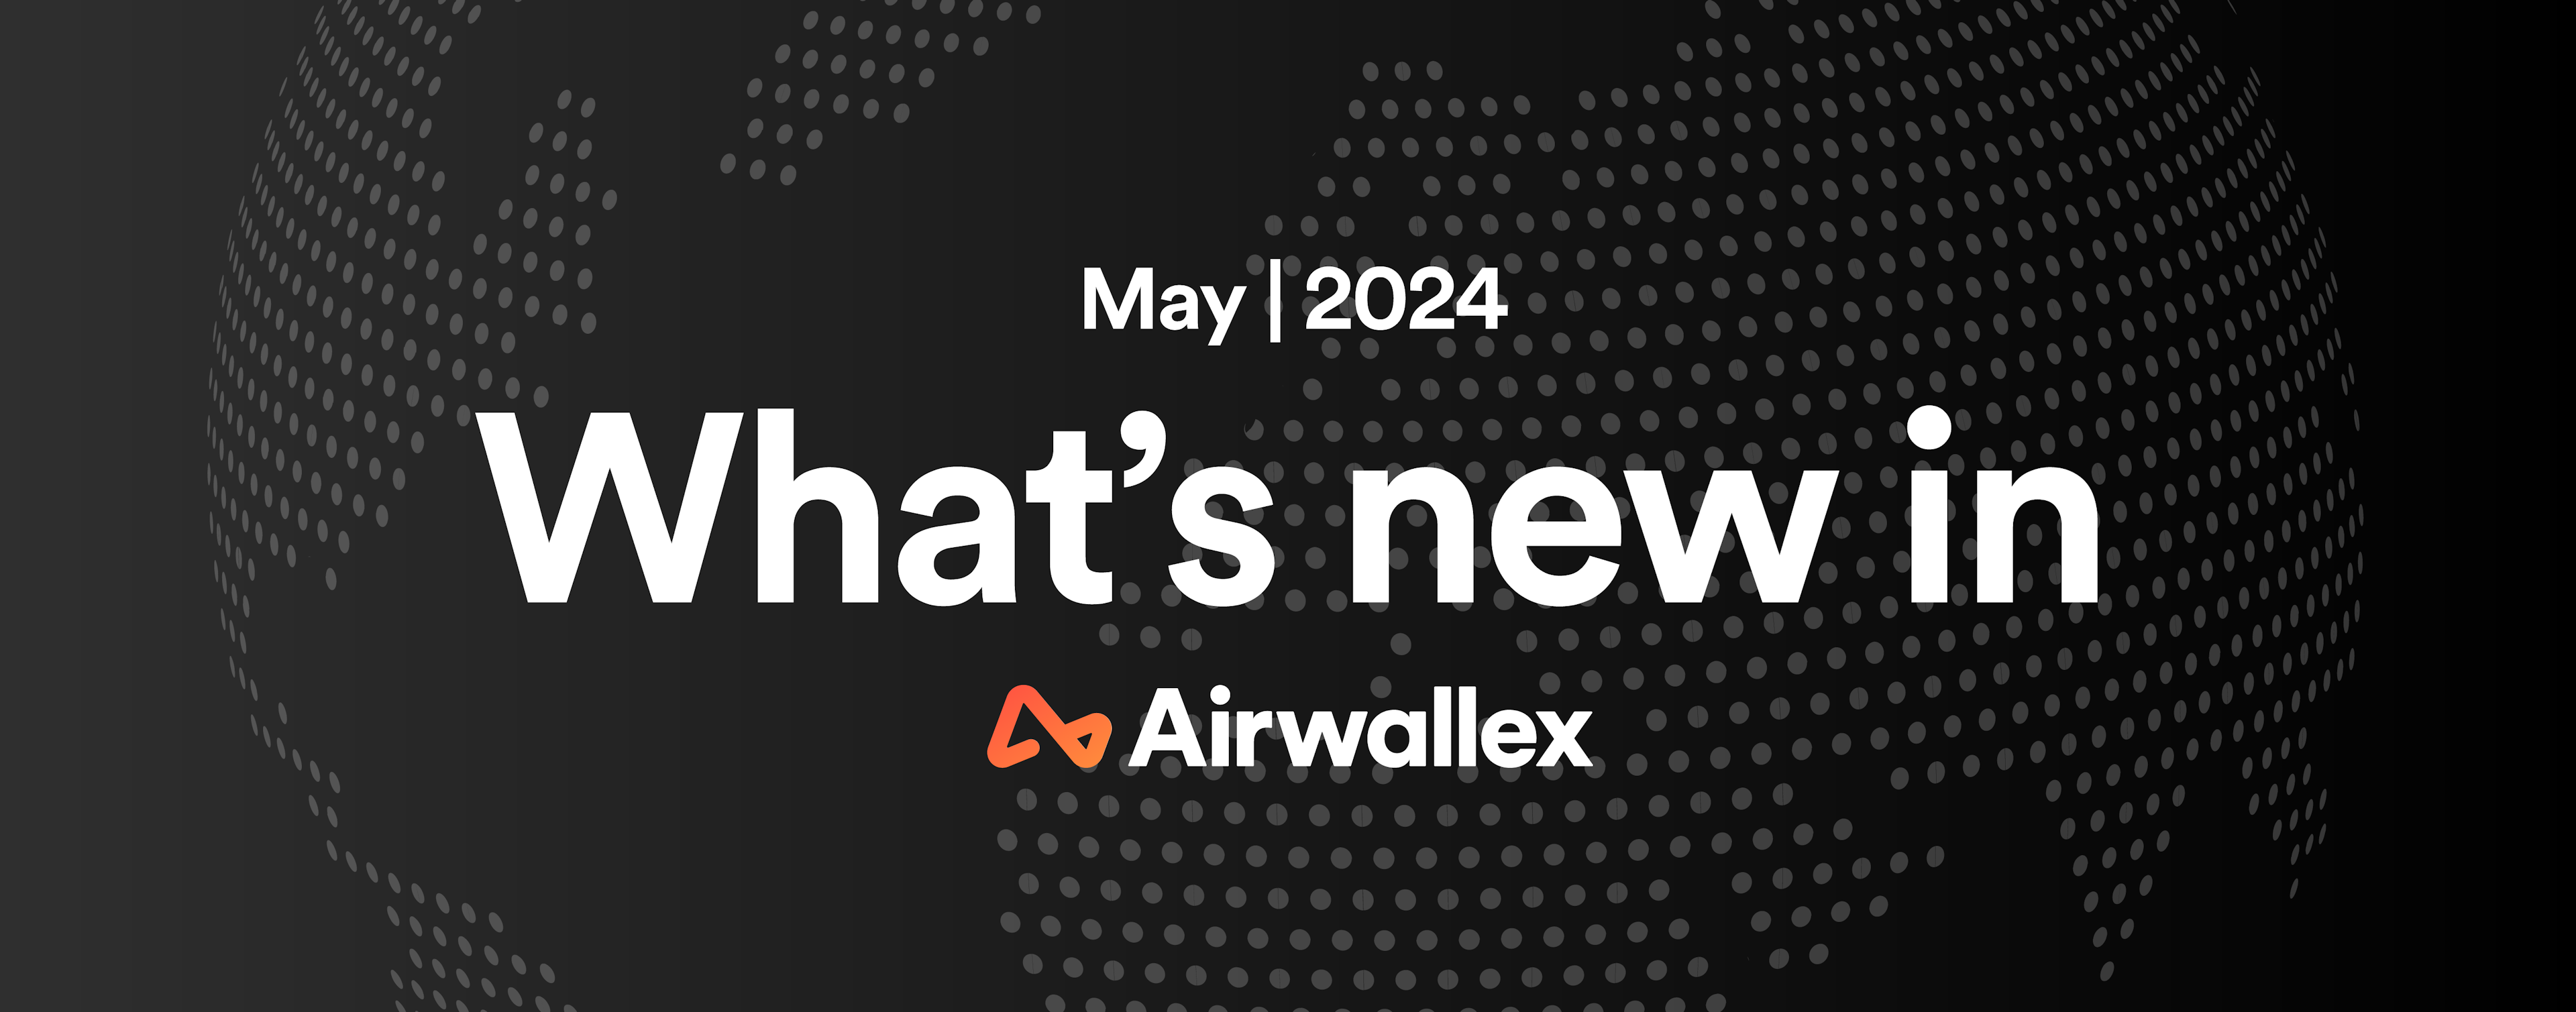 Airwallex May release notes logo